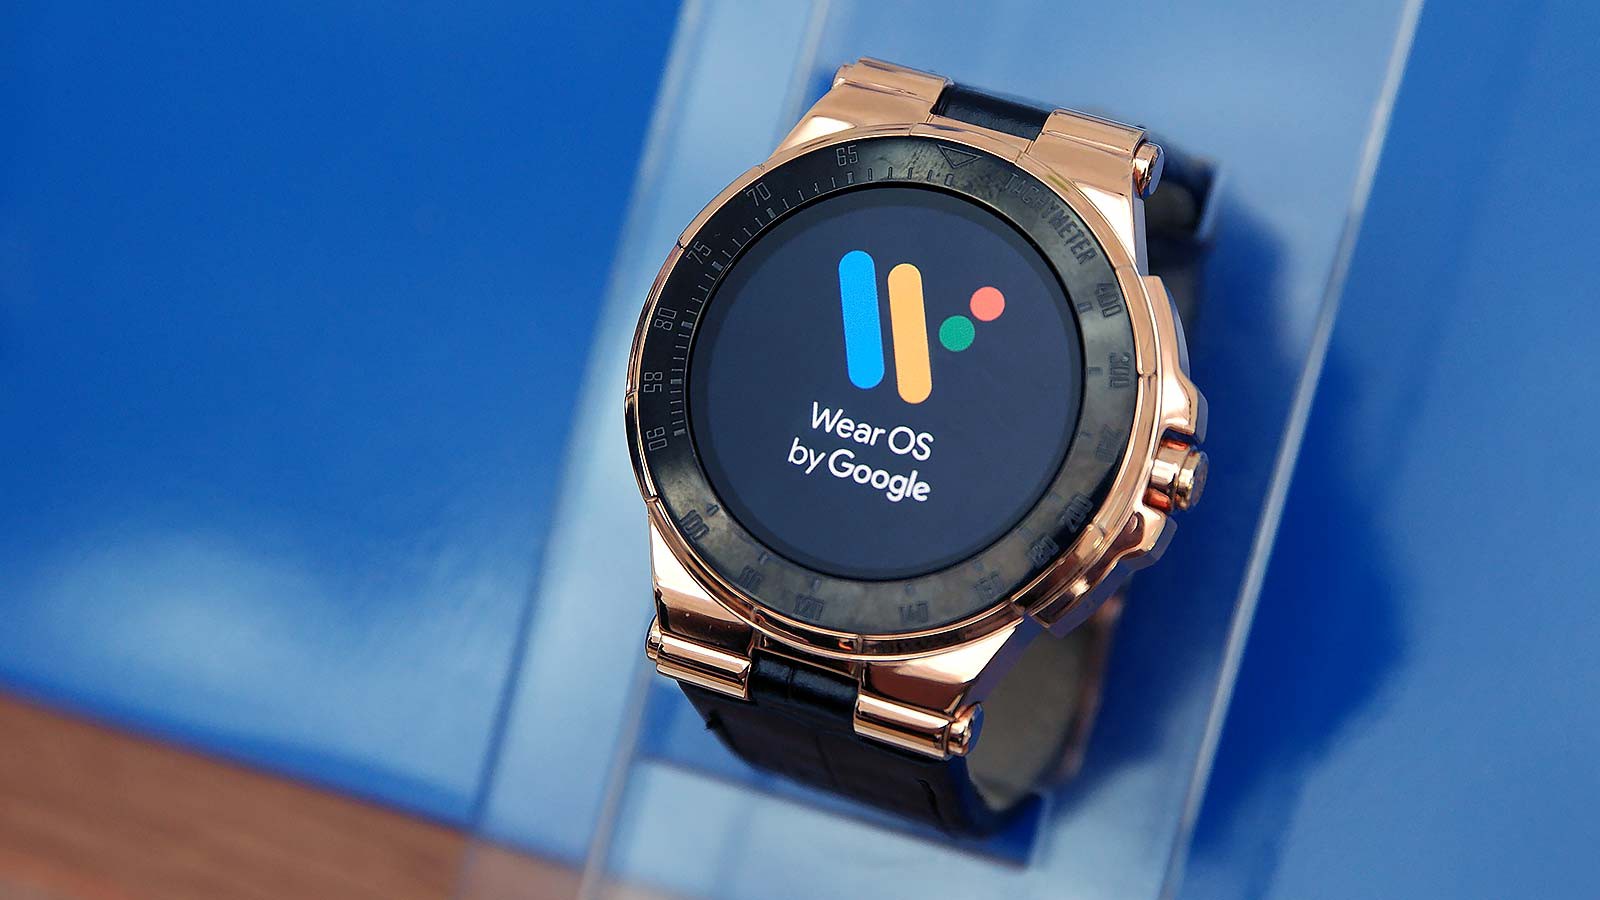 wear os smartwatch by Google